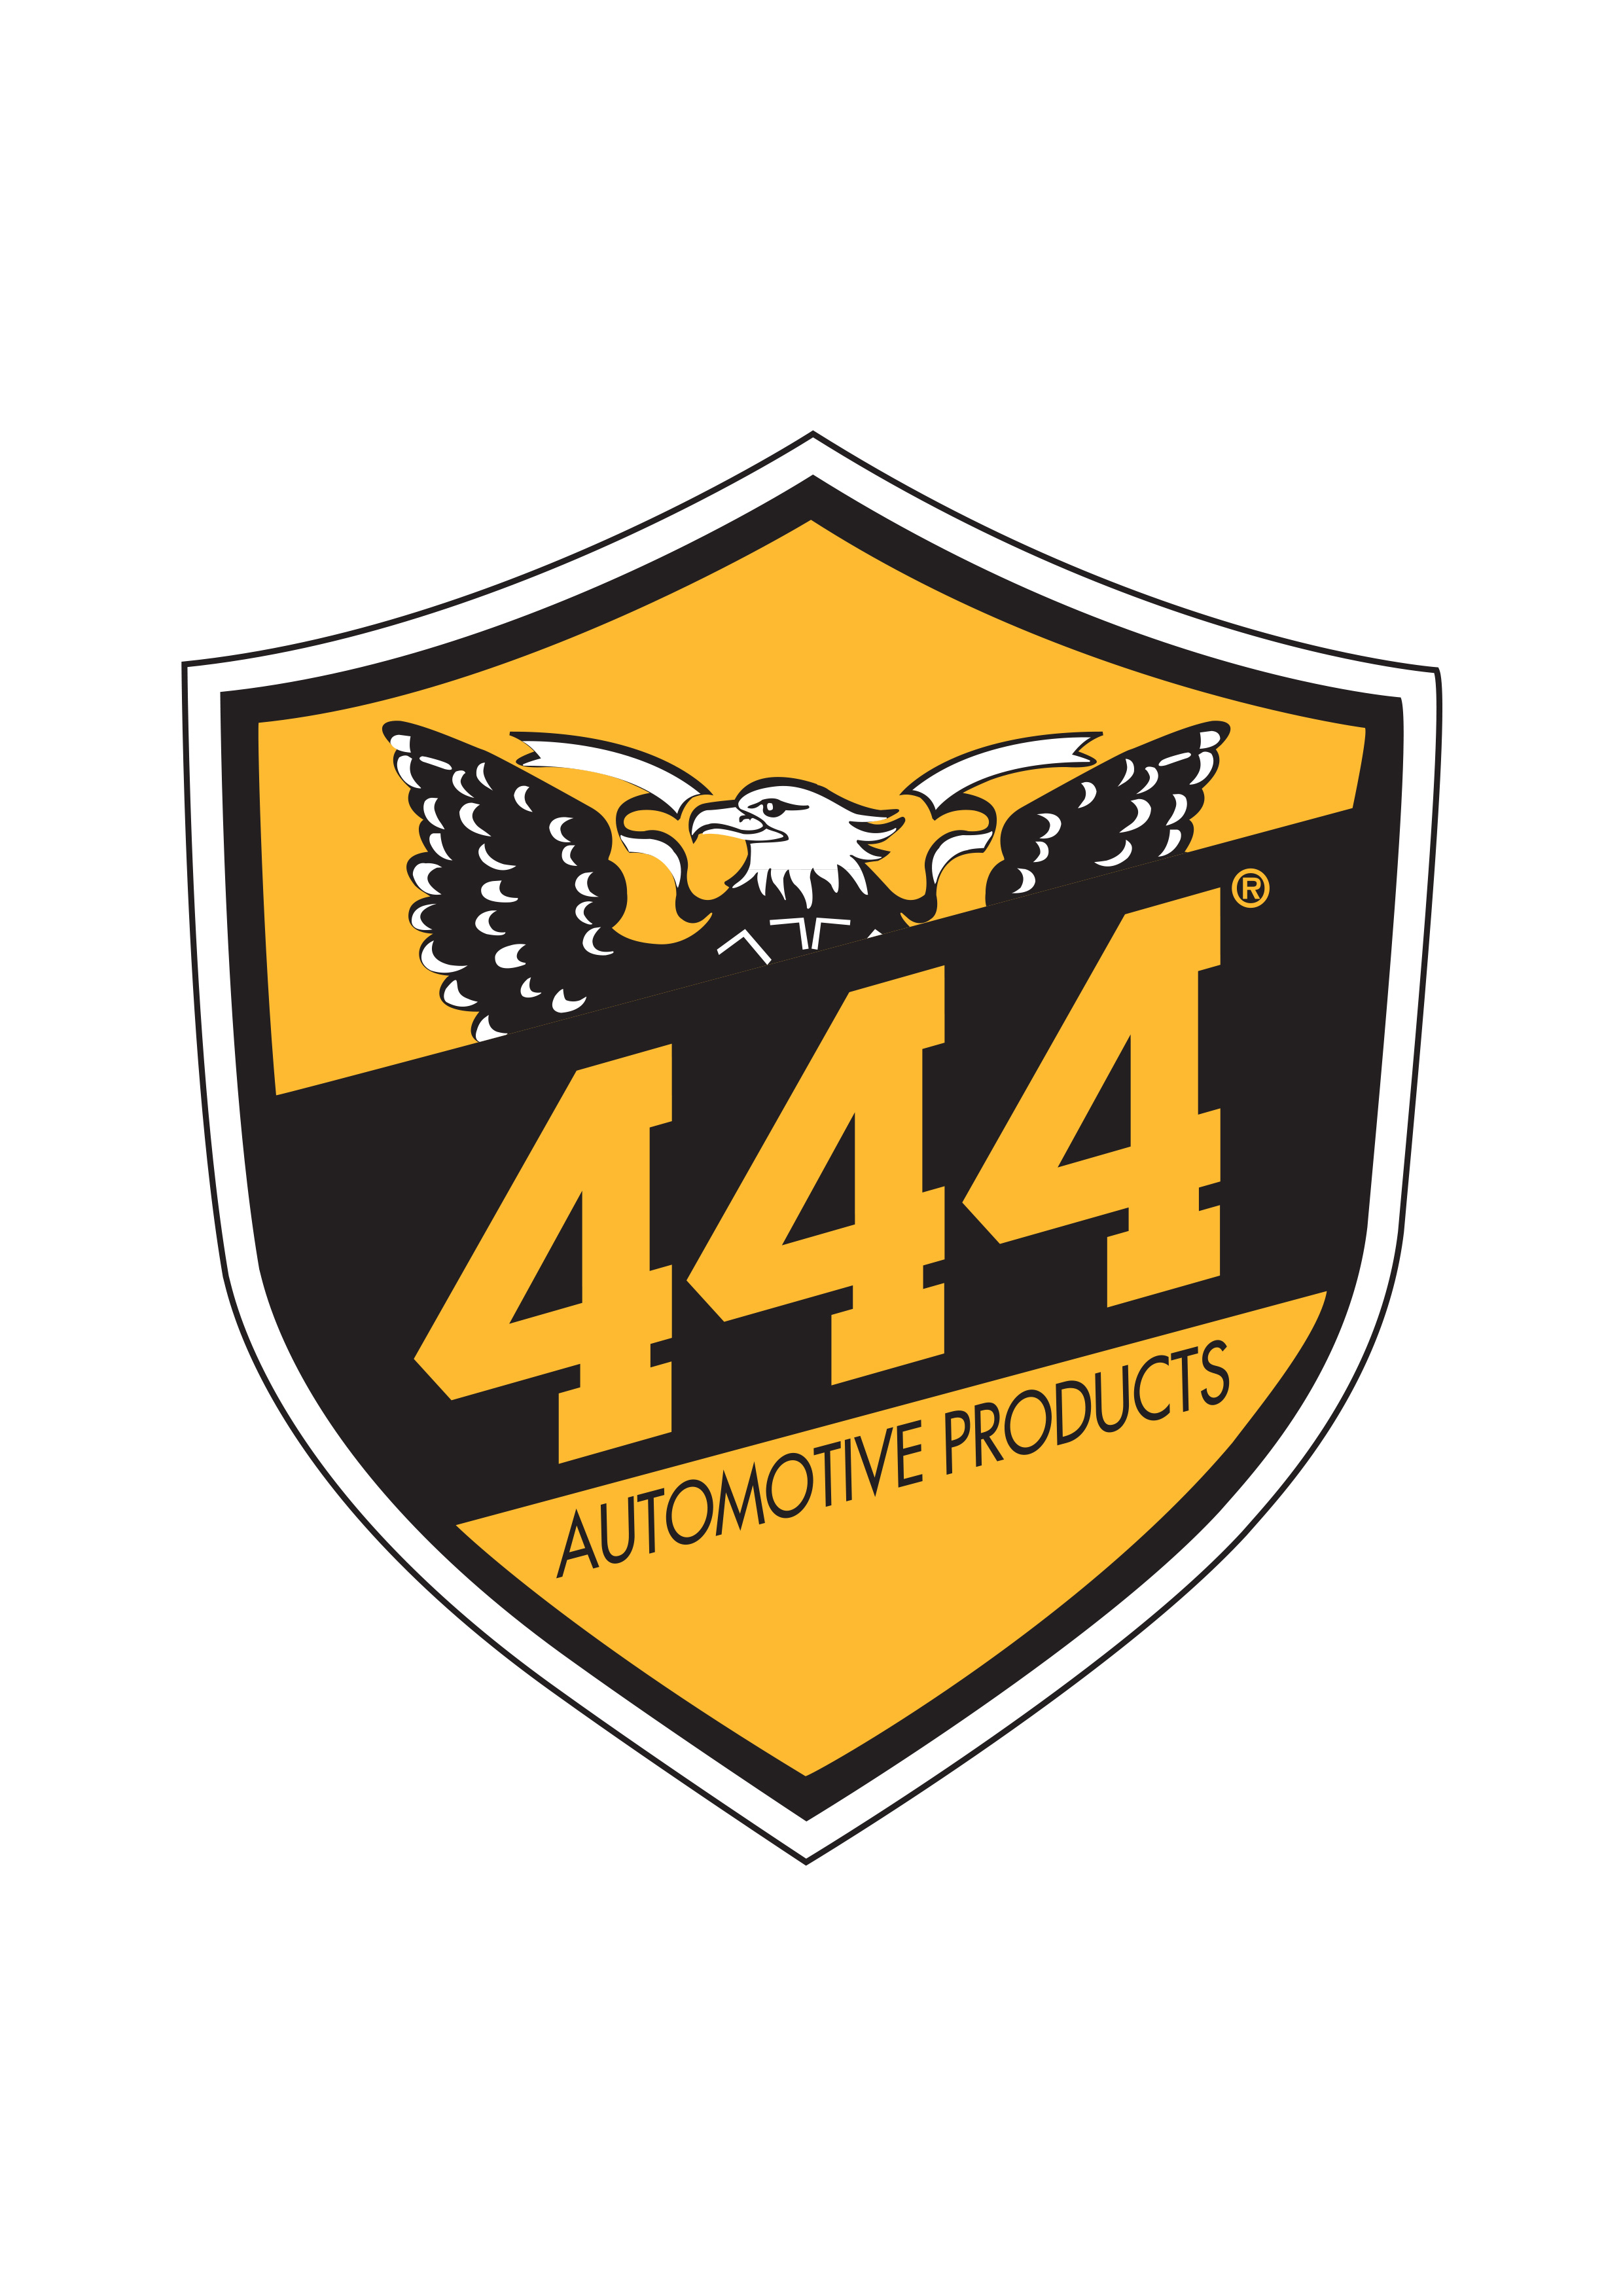 444 Automotive Products